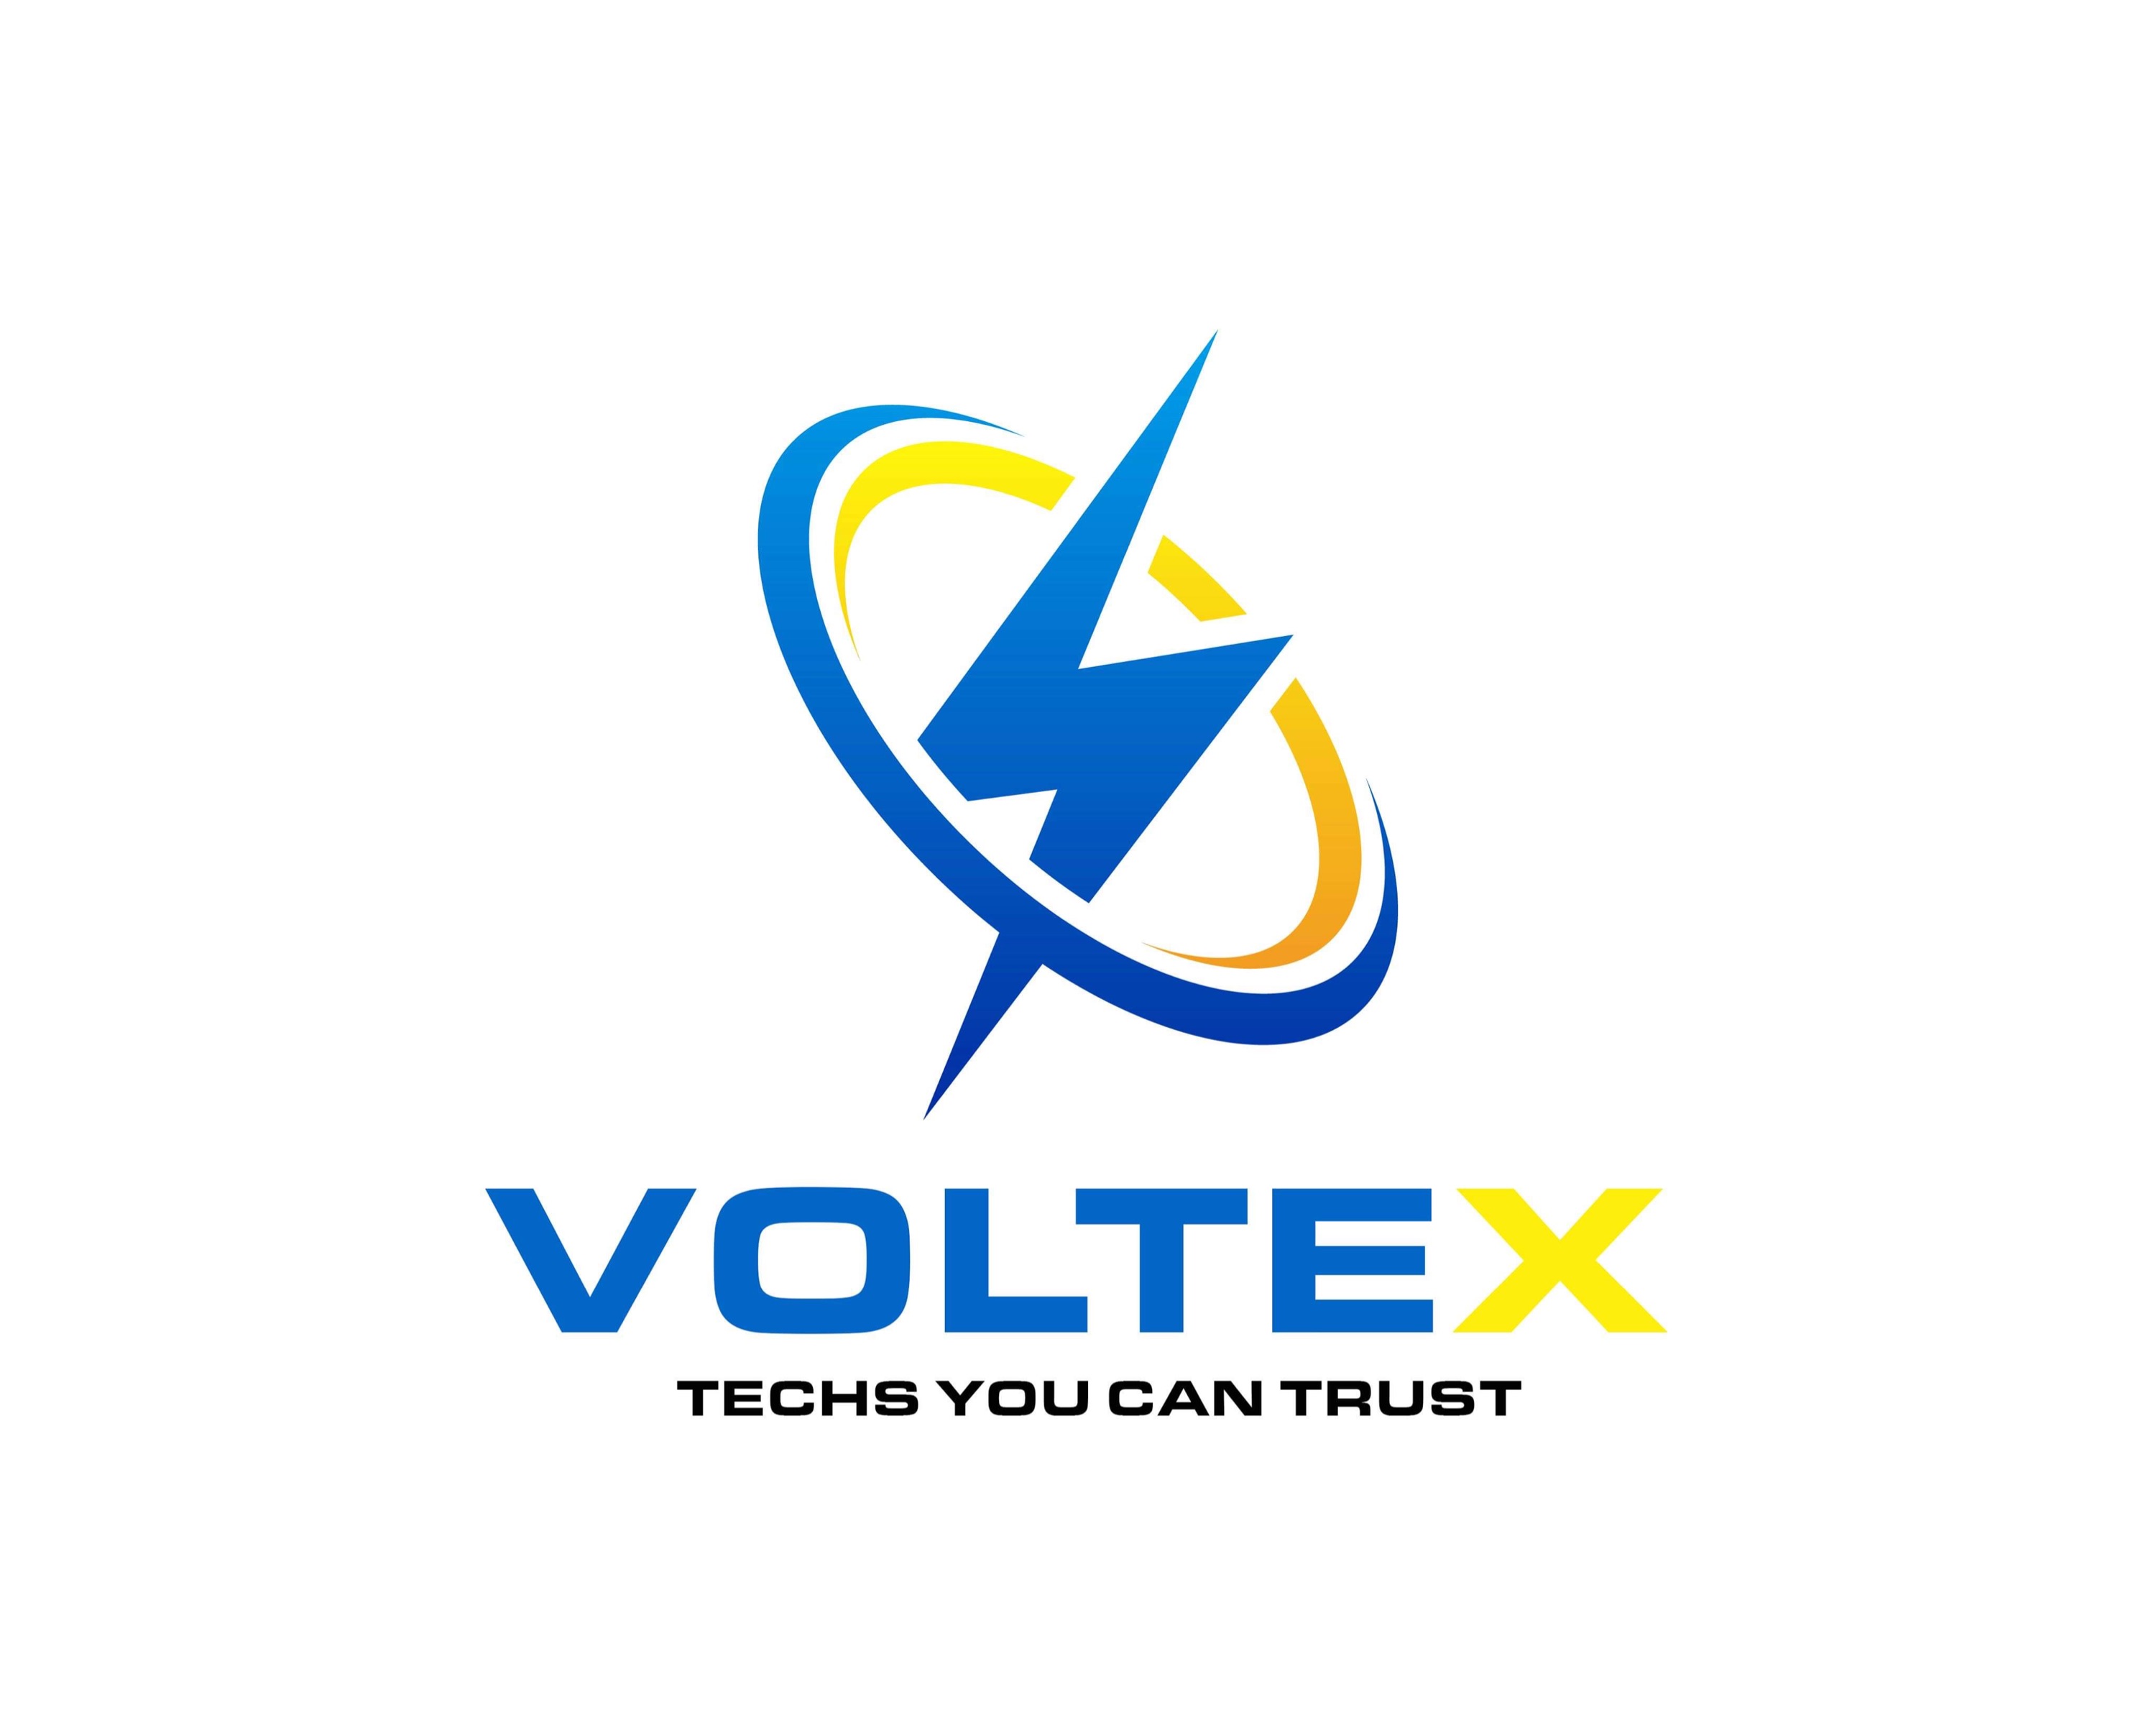 Voltex Logo